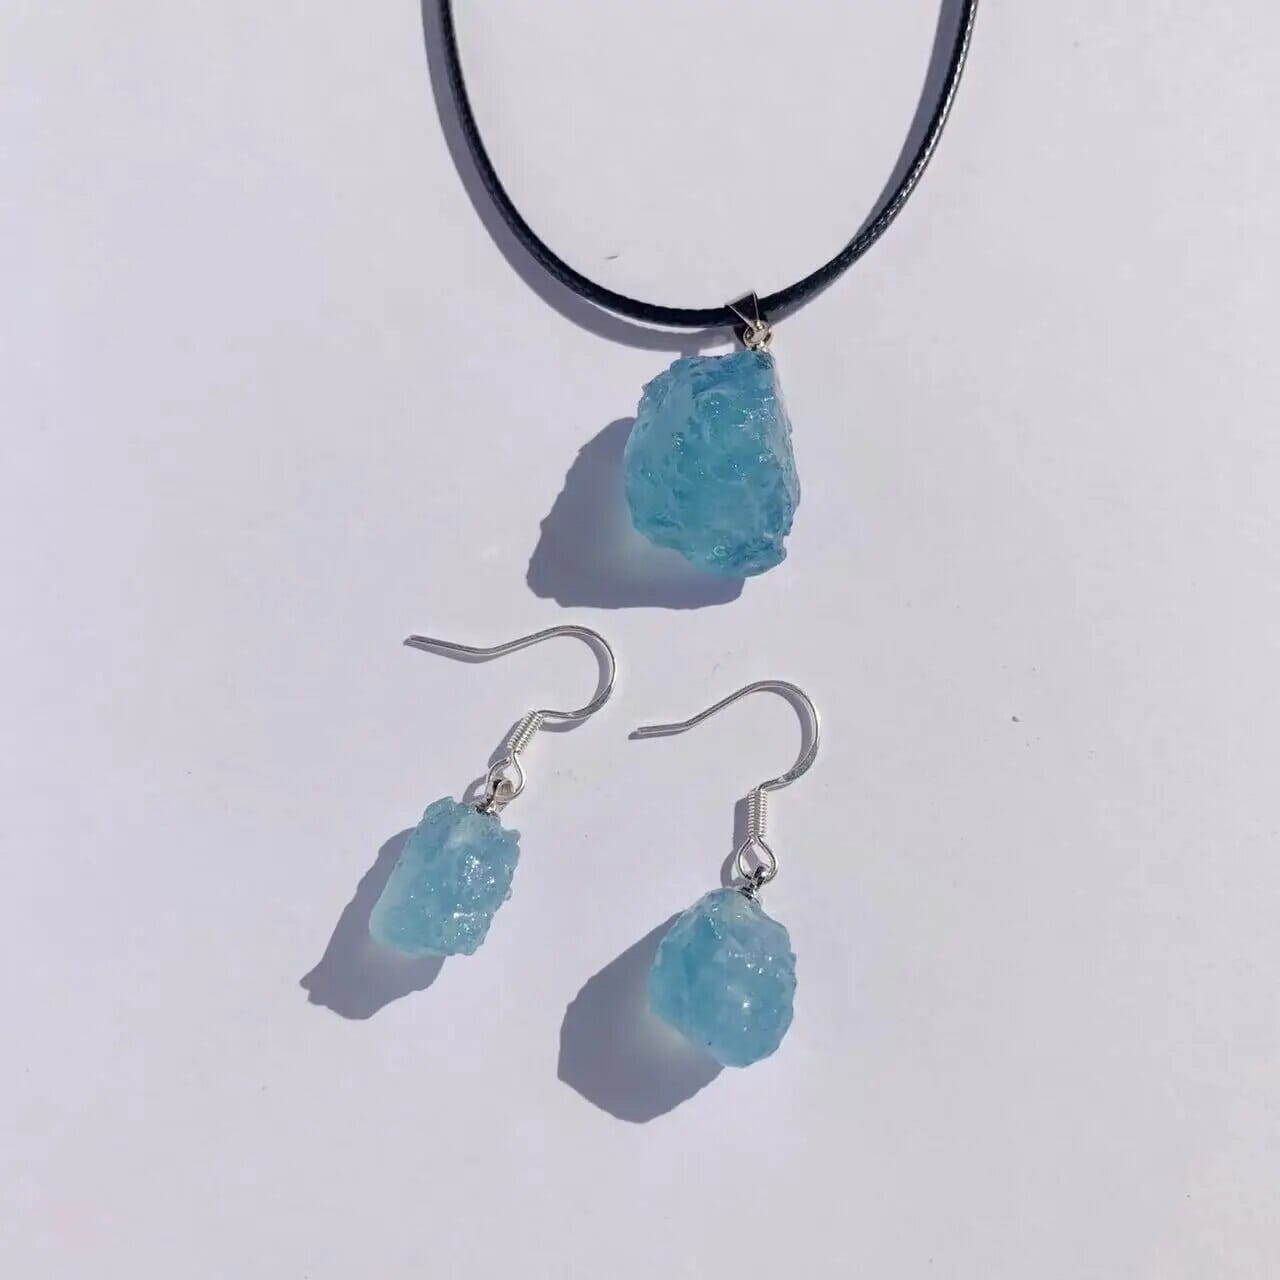 Irregular Aquamarine Stones Earrings Pendant Necklace JewelryJewelry Sets1 SET